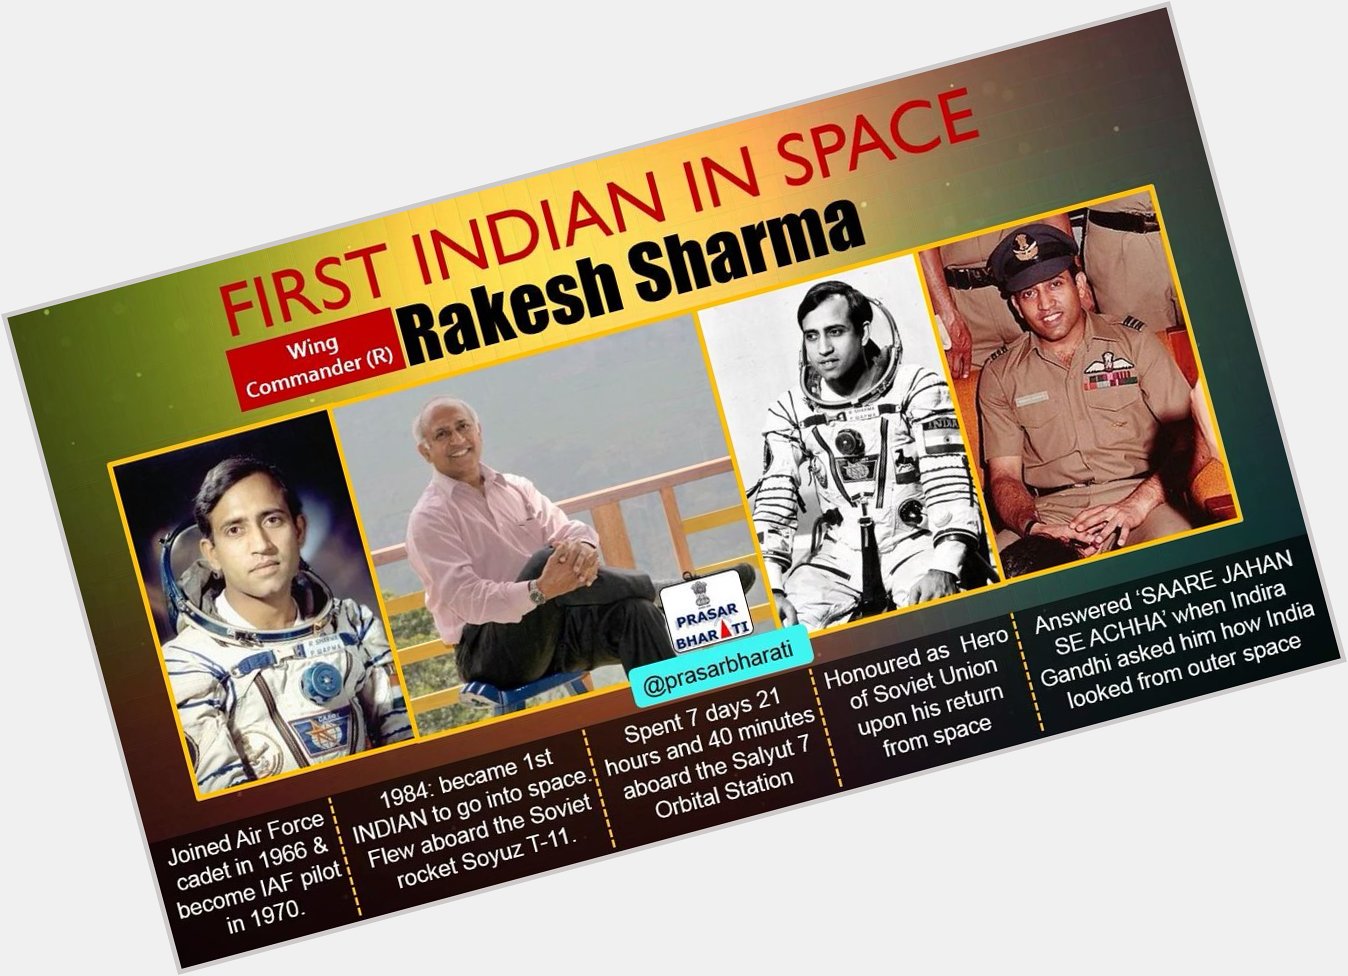 Happy Birthday Rakesh Sharma ji
The First Indian to travel in Space,Ashok Chakra turns 68 today. 